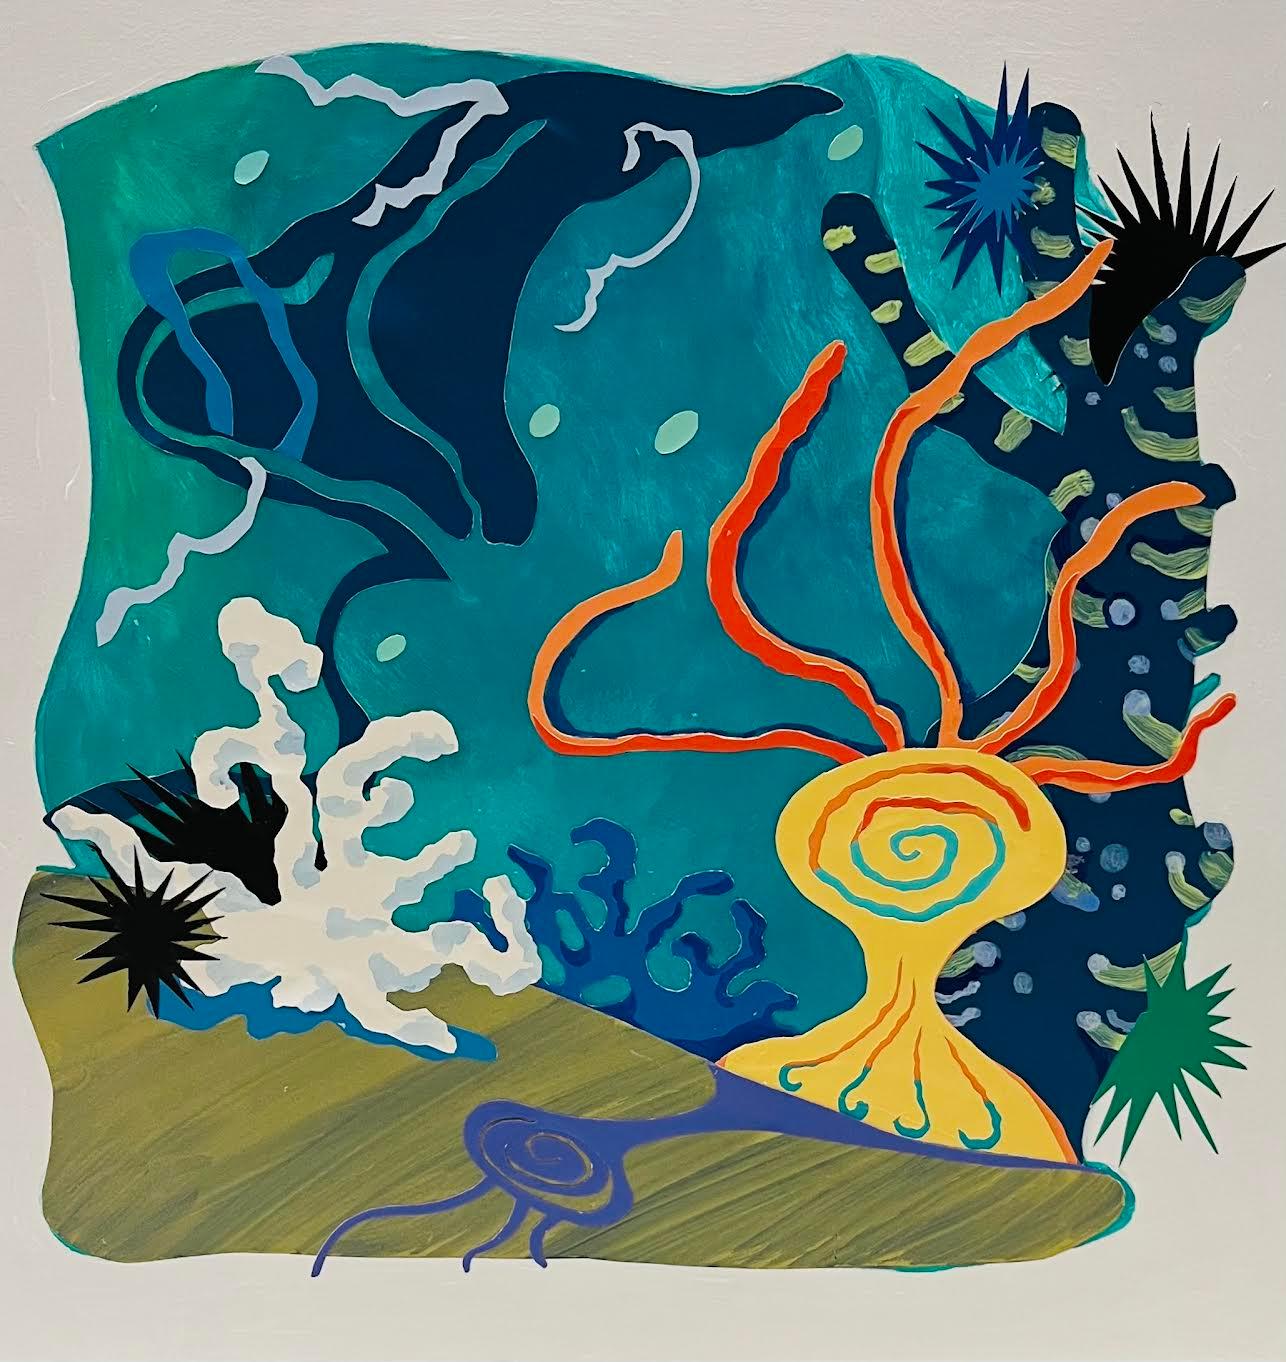 Phantastical, Meaningful colorful imaginative undersea fantasy aquatic motion - Mixed Media Art by Philomena Marano